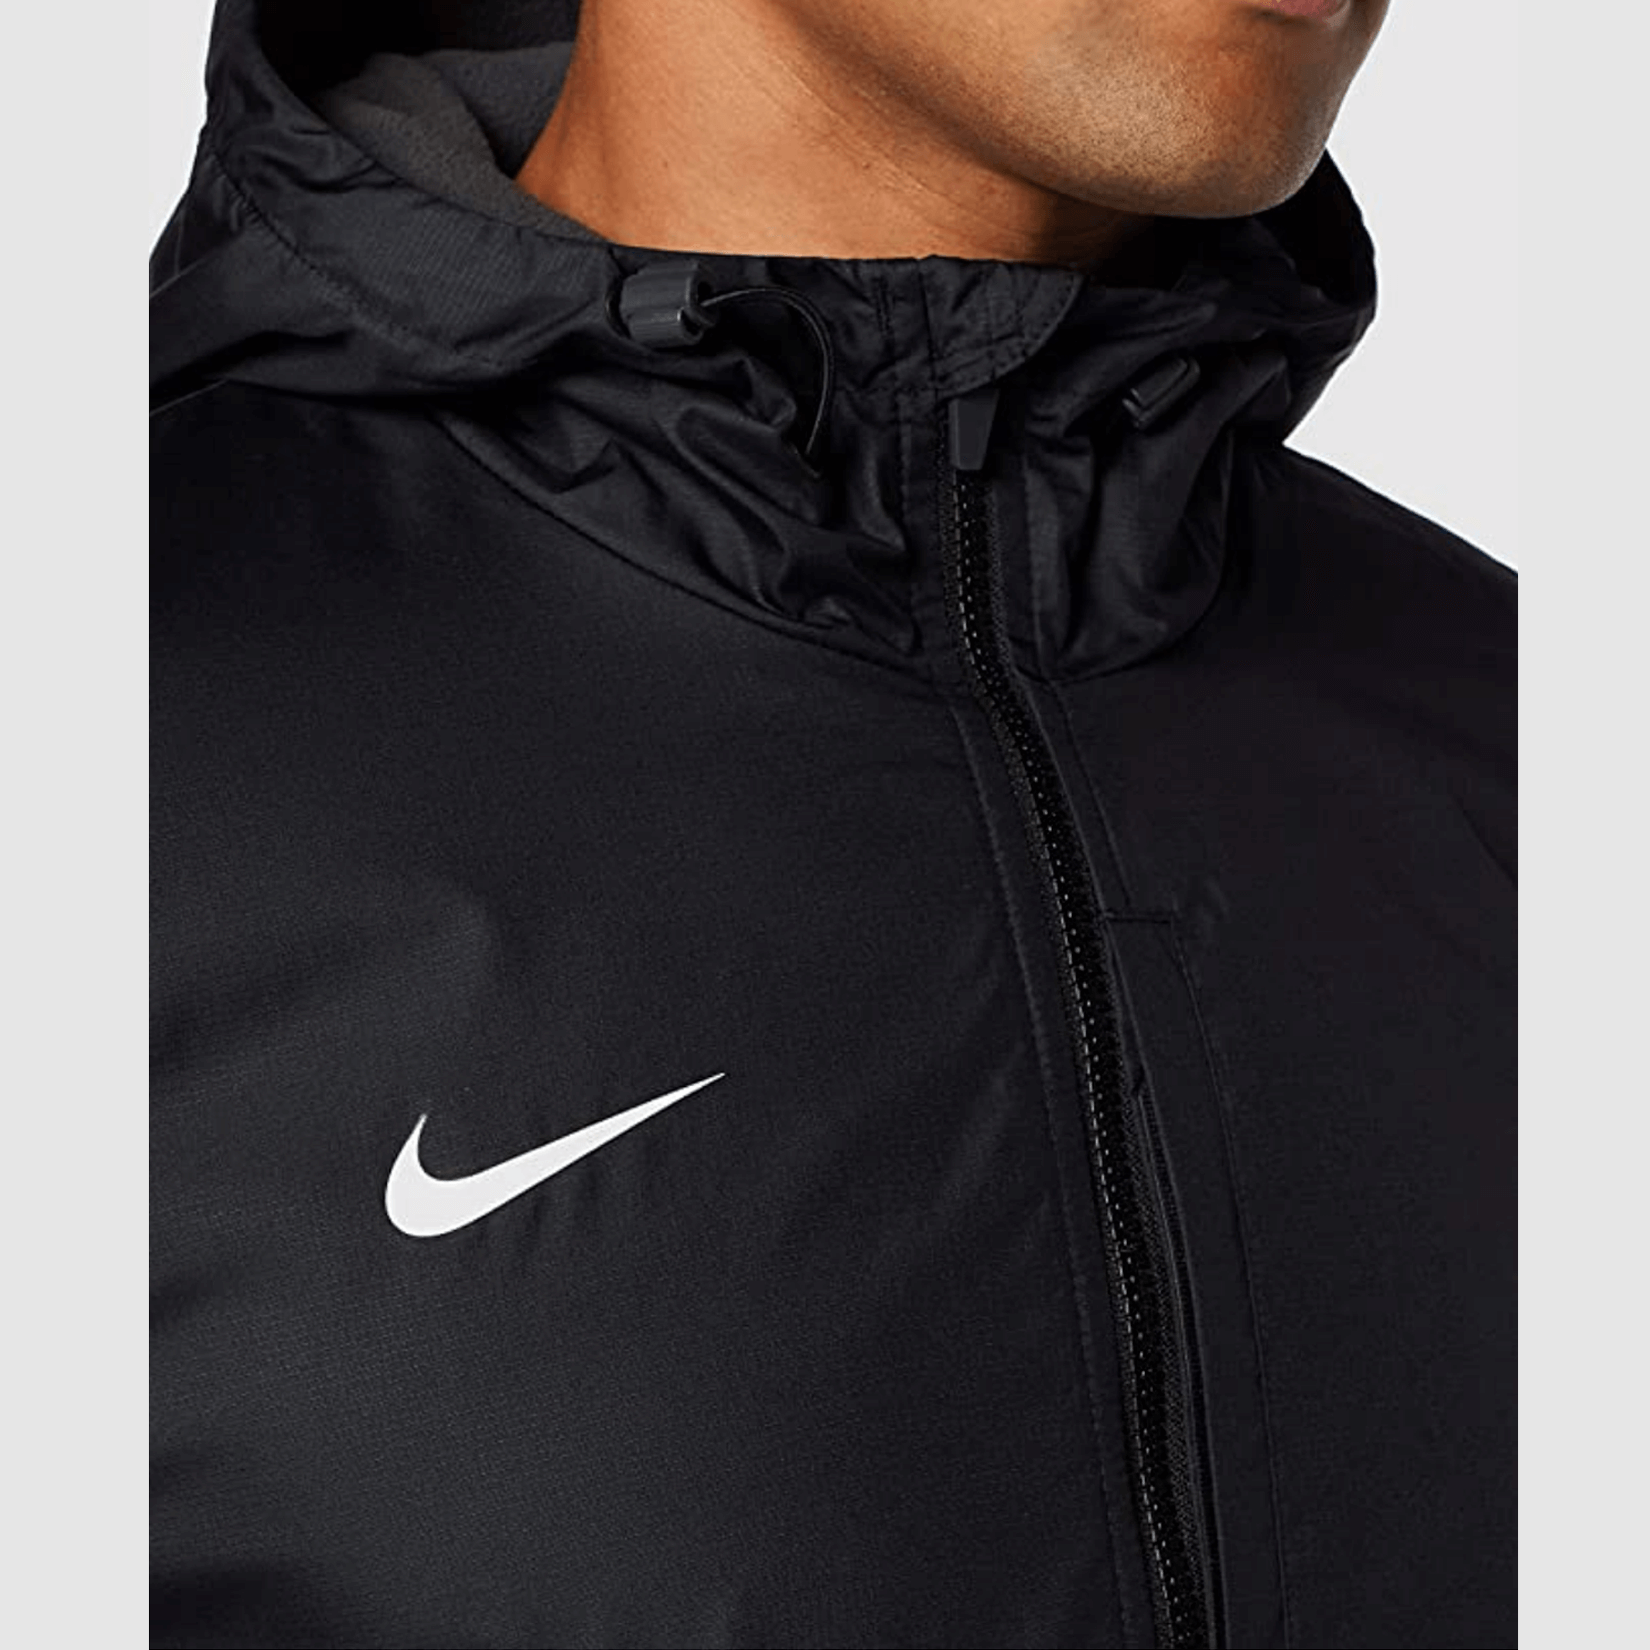 Nike Team Fall Fleece Lined Jacket - Kitlocker.com